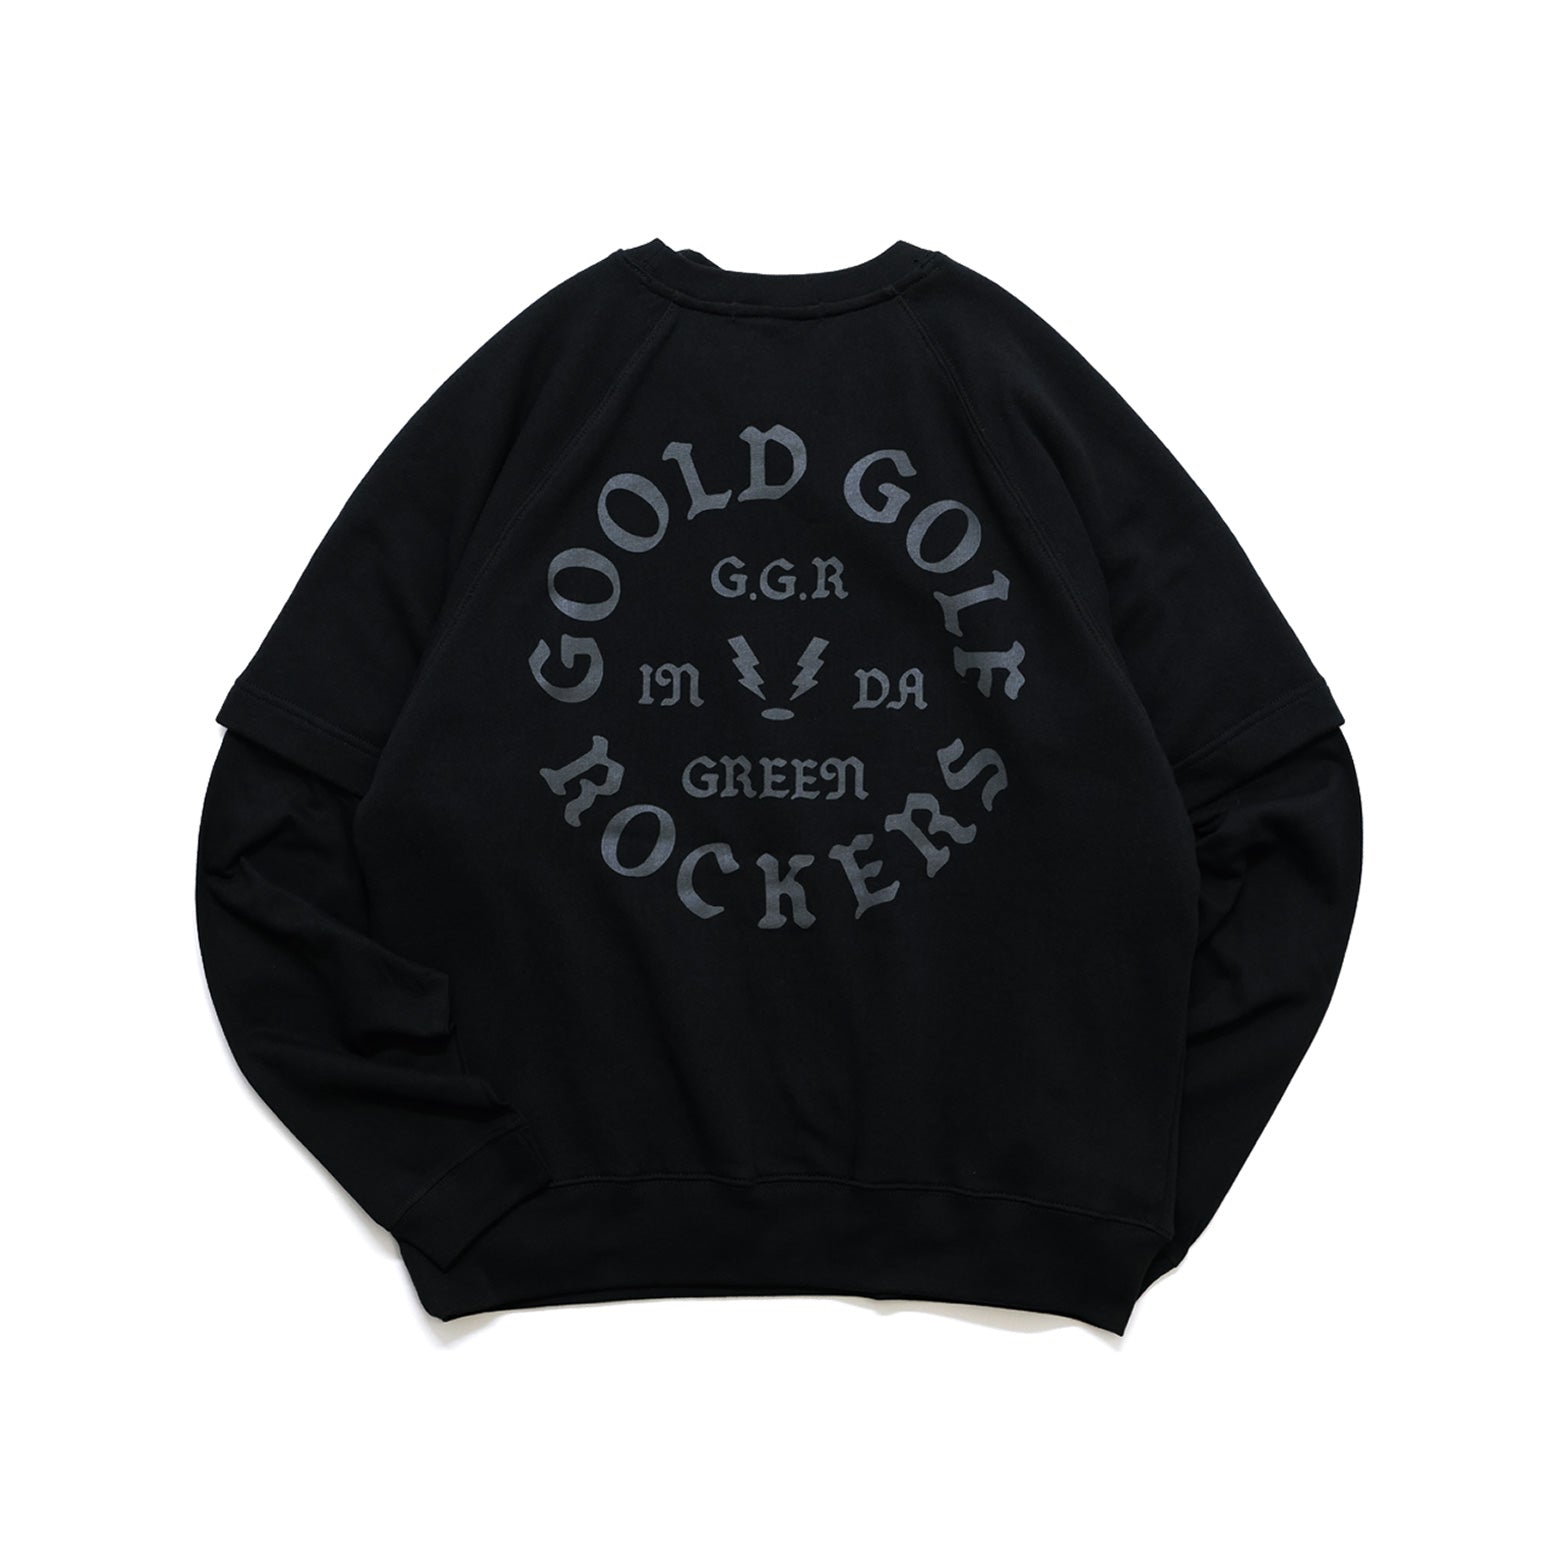 ALL – GOOLD GOLF ROCKERS